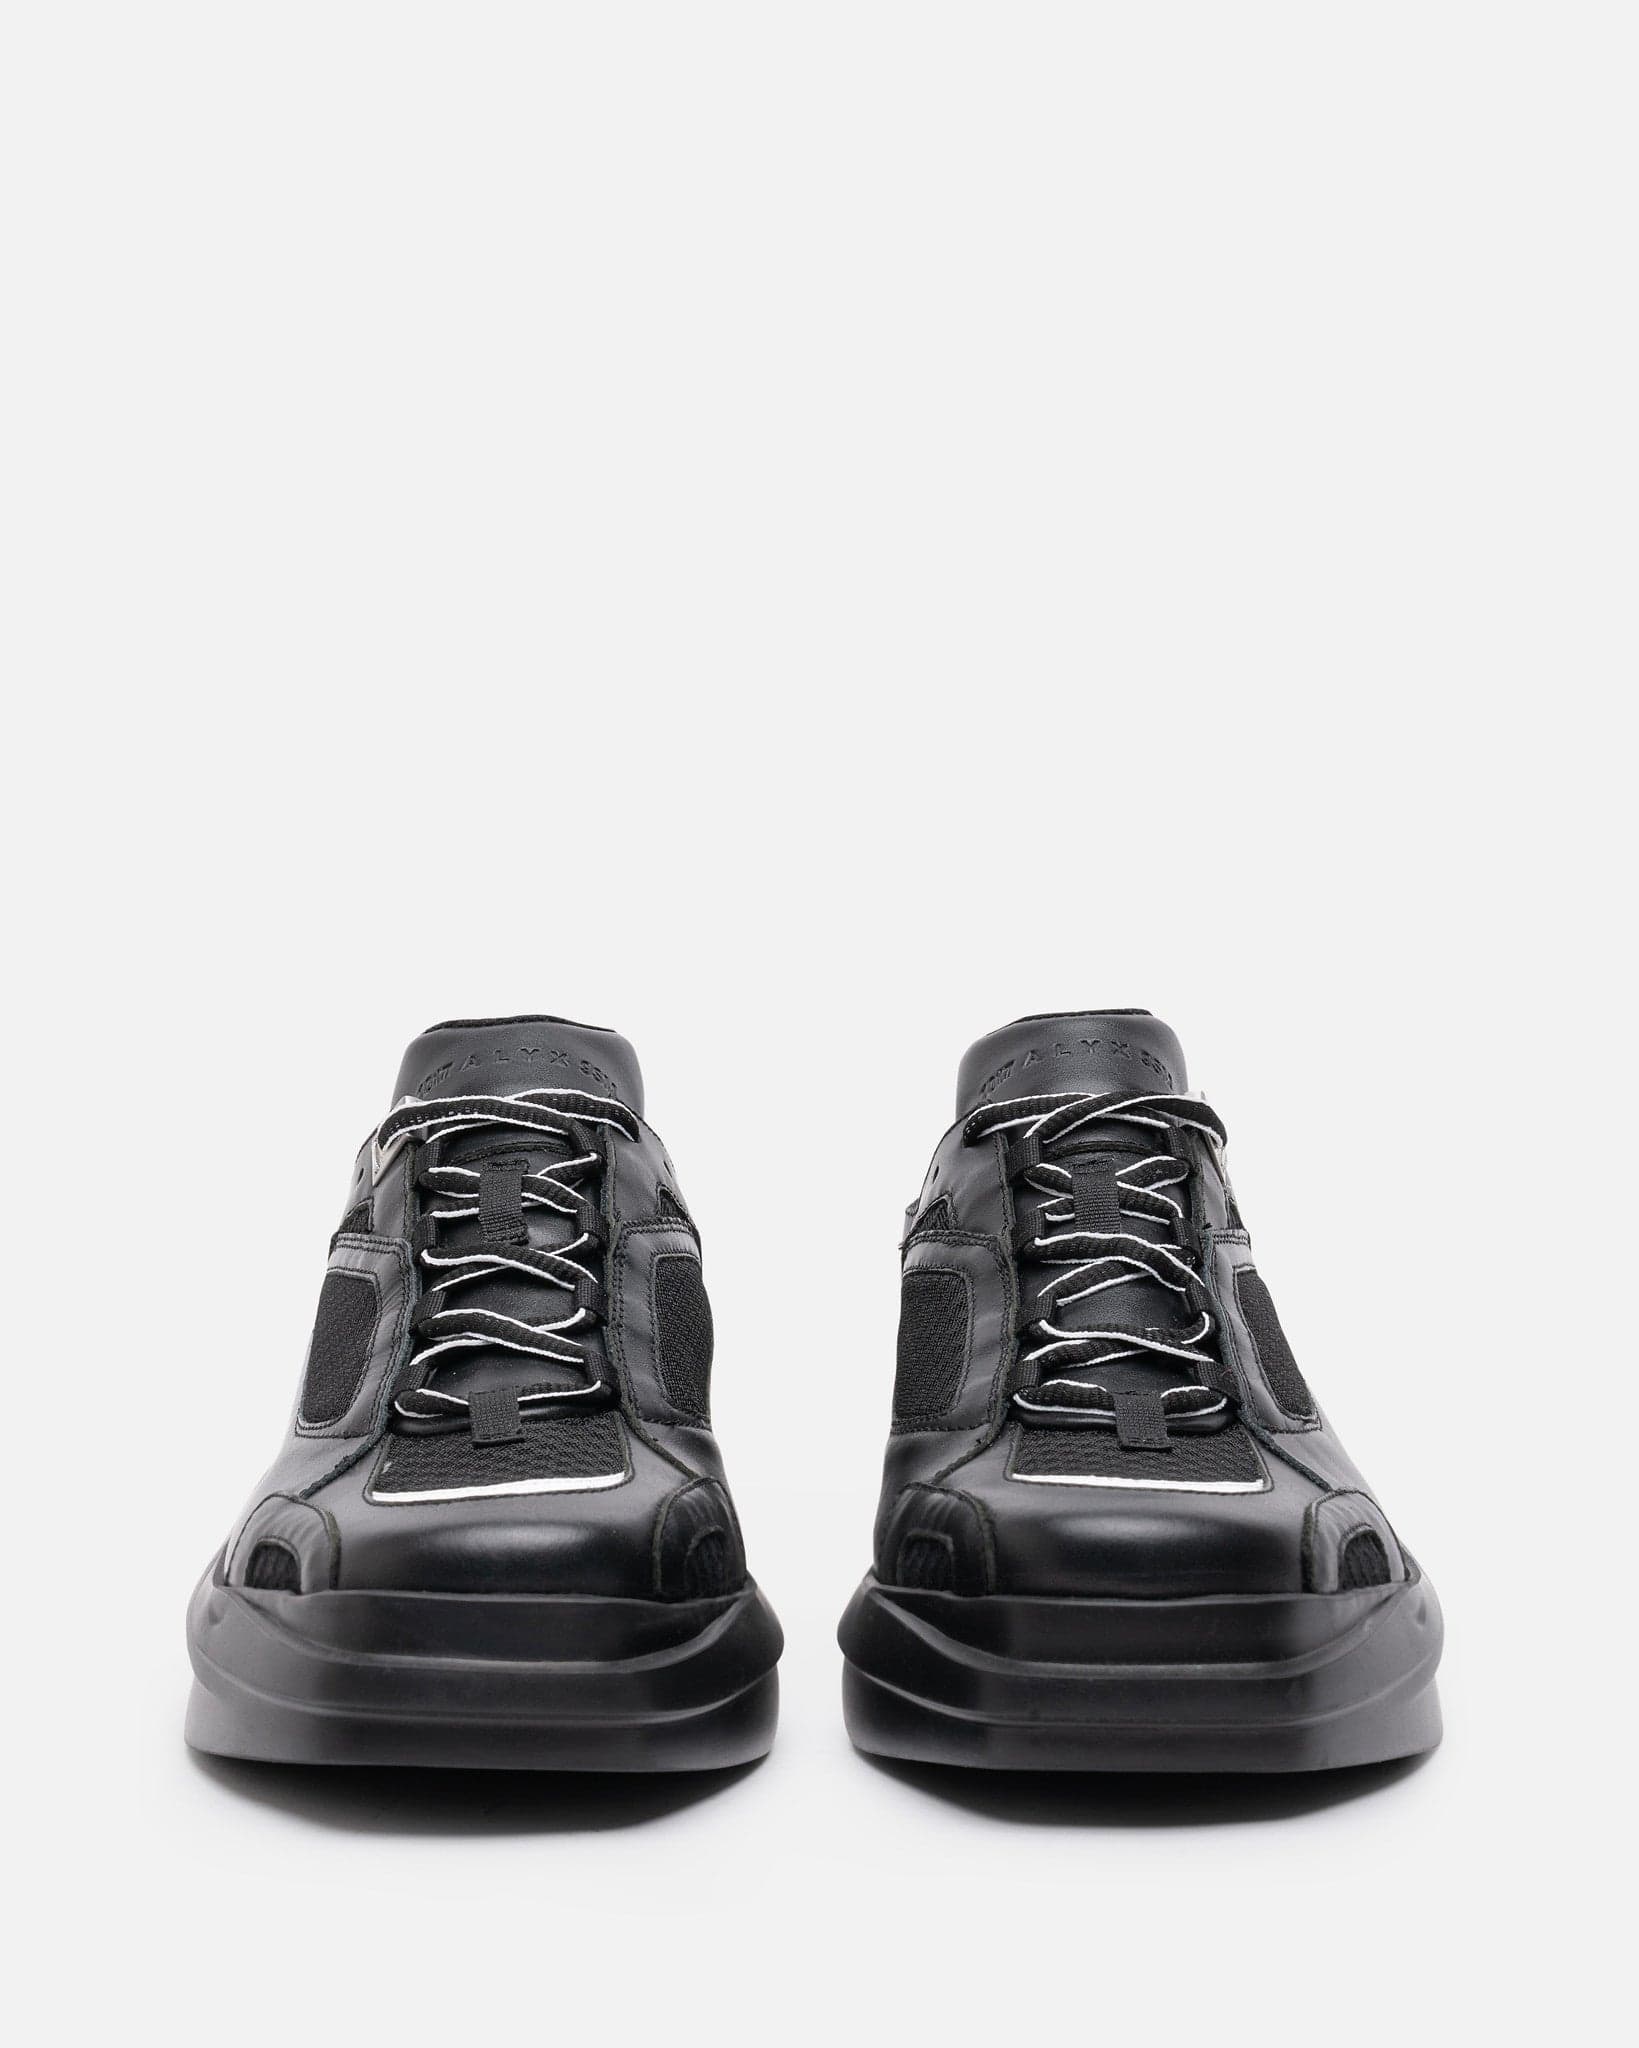 1017 ALYX 9SM Men's Sneakers Mixed Mono Hiking Sneaker in Black/White